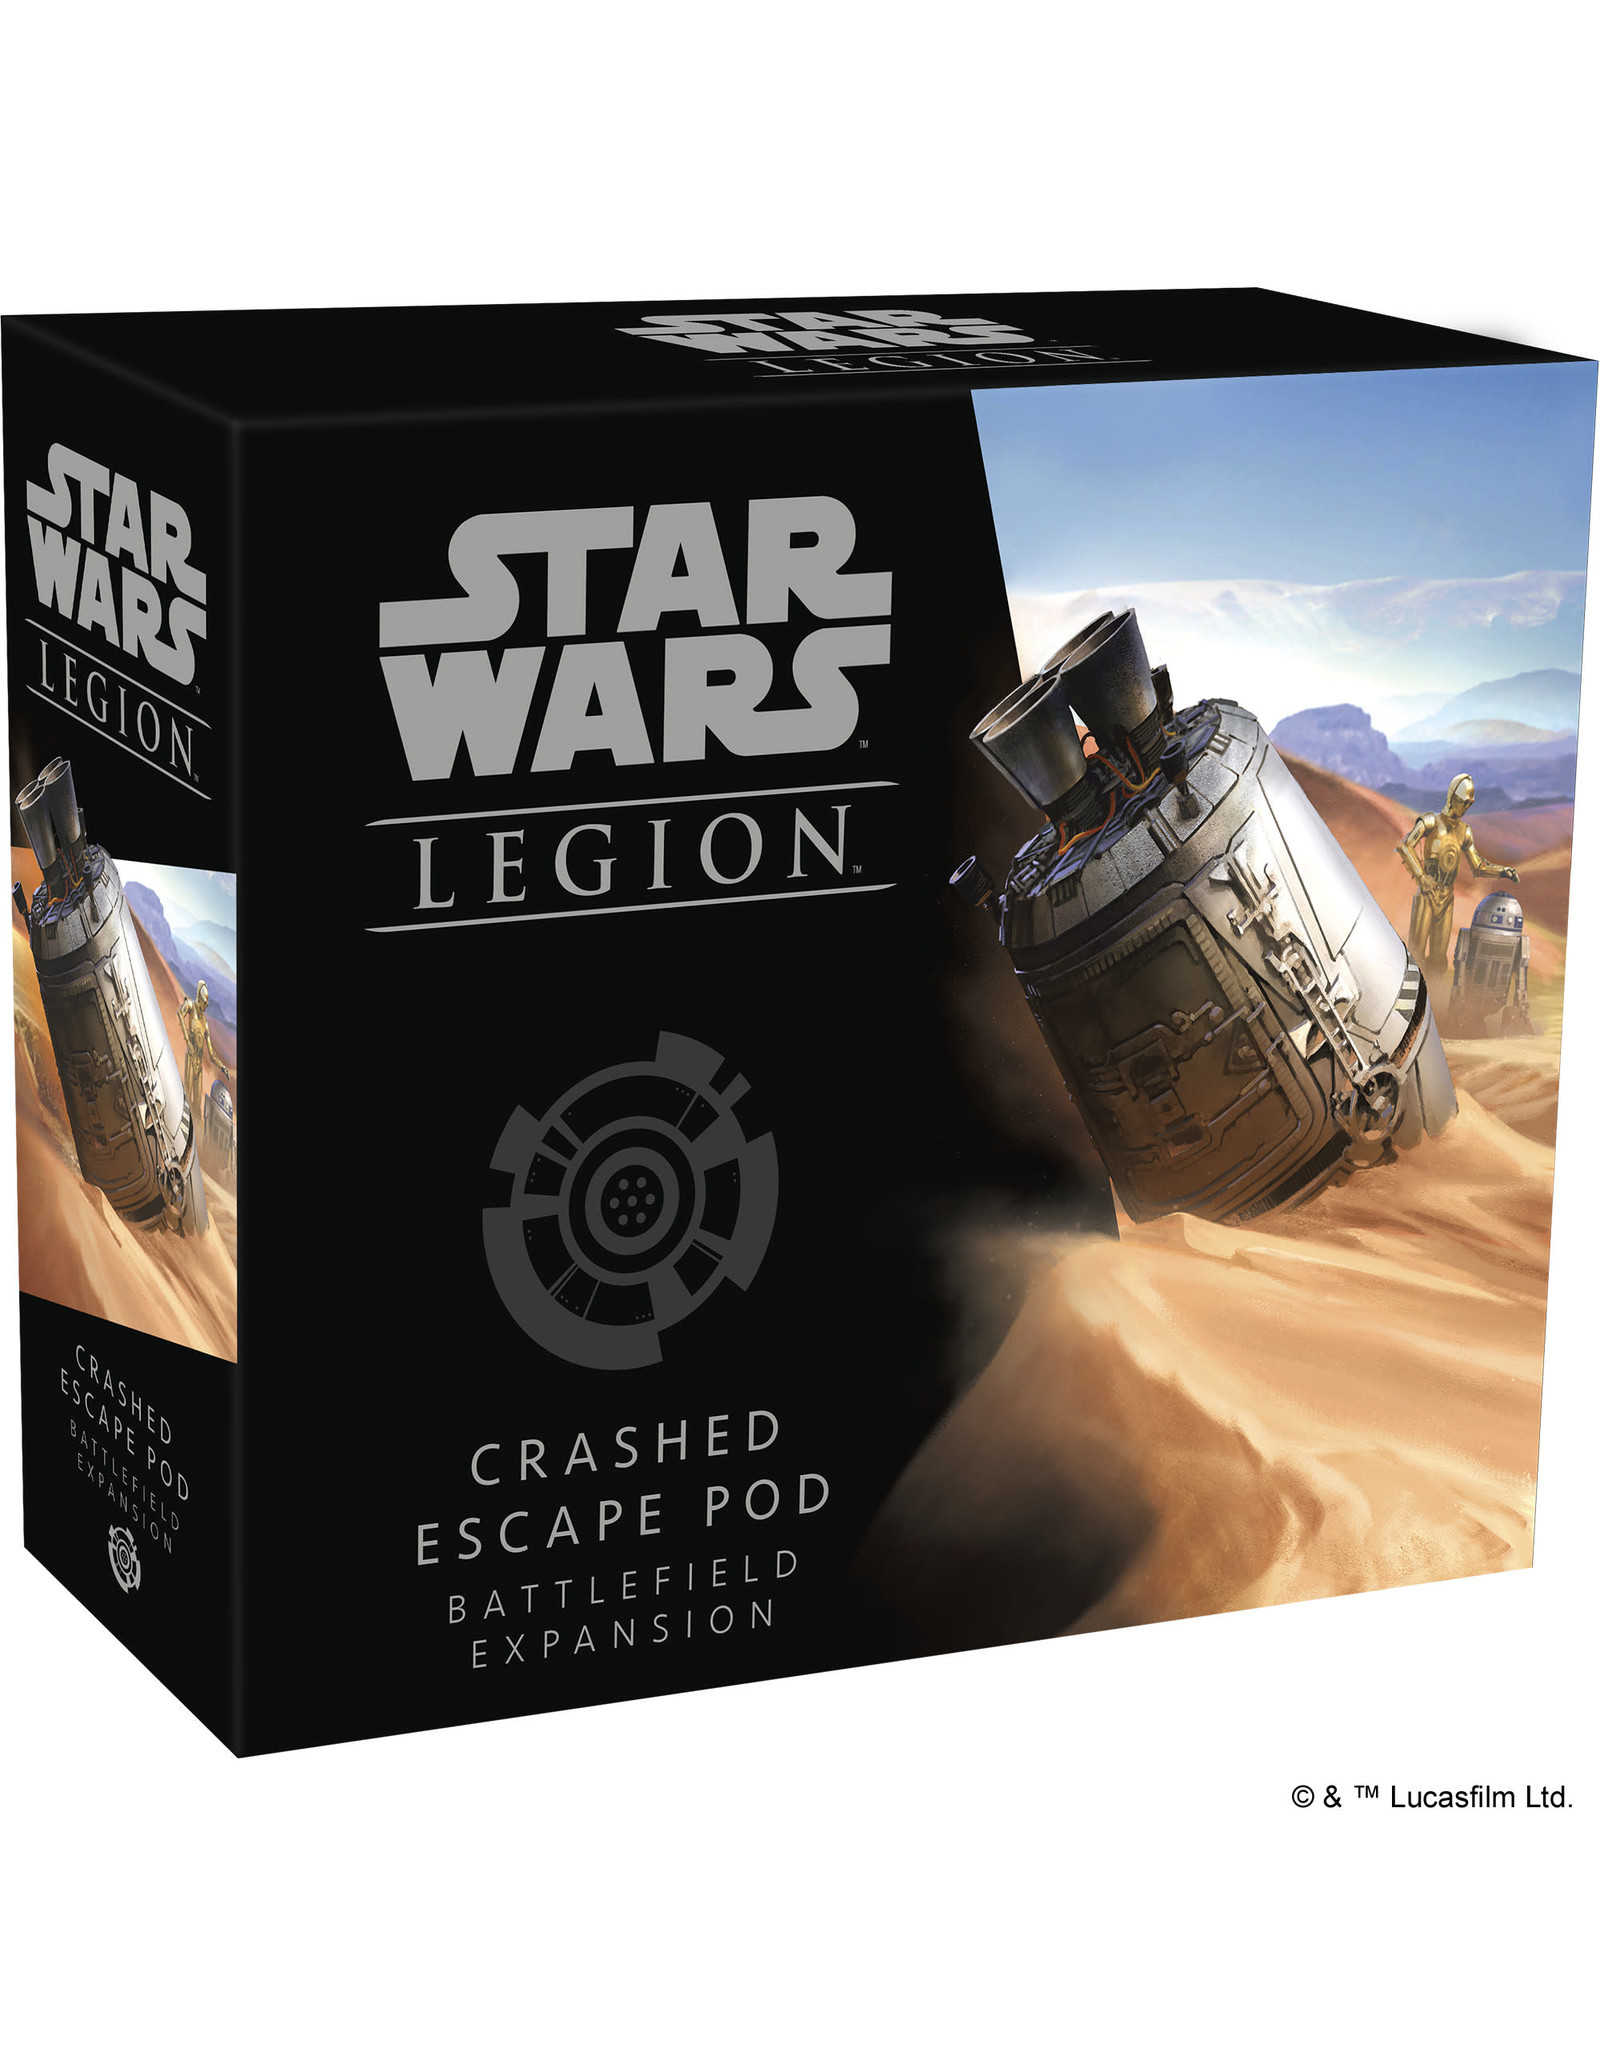 STAR WARS LEGION Star Wars Legion Crashed Escape Pod Battlefield Expansion